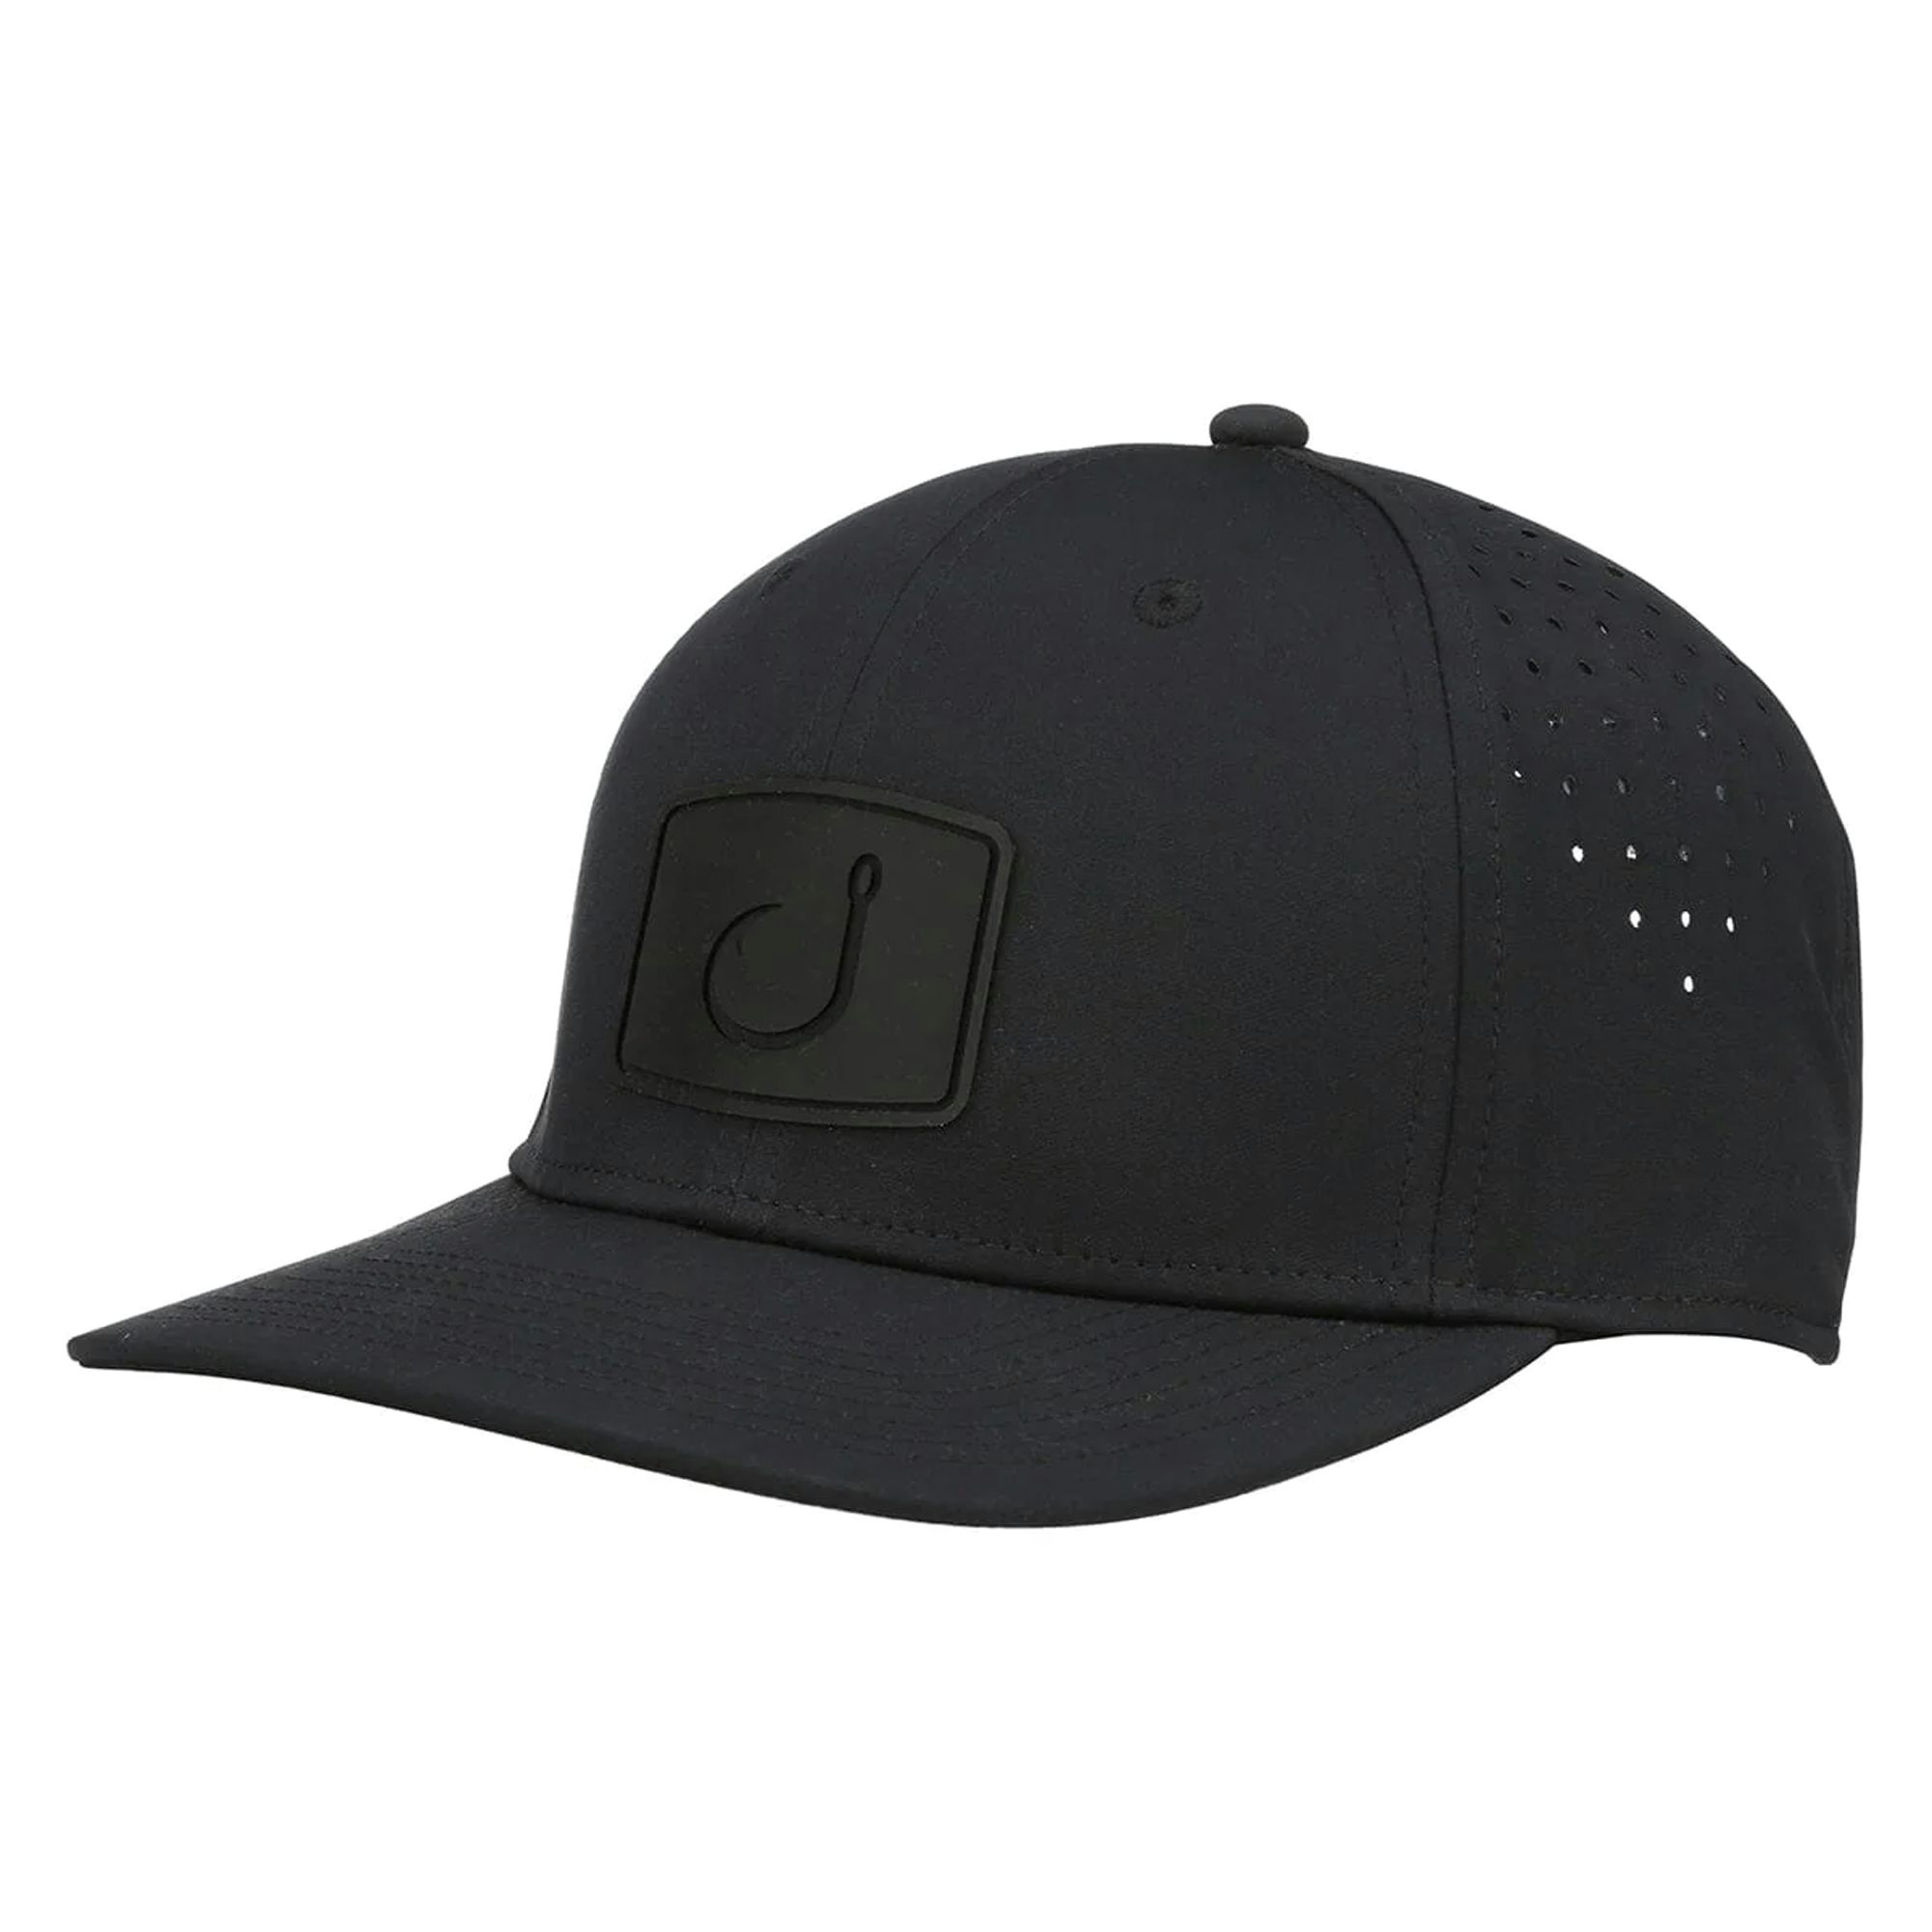 AVID Pro Performance Hat - Black